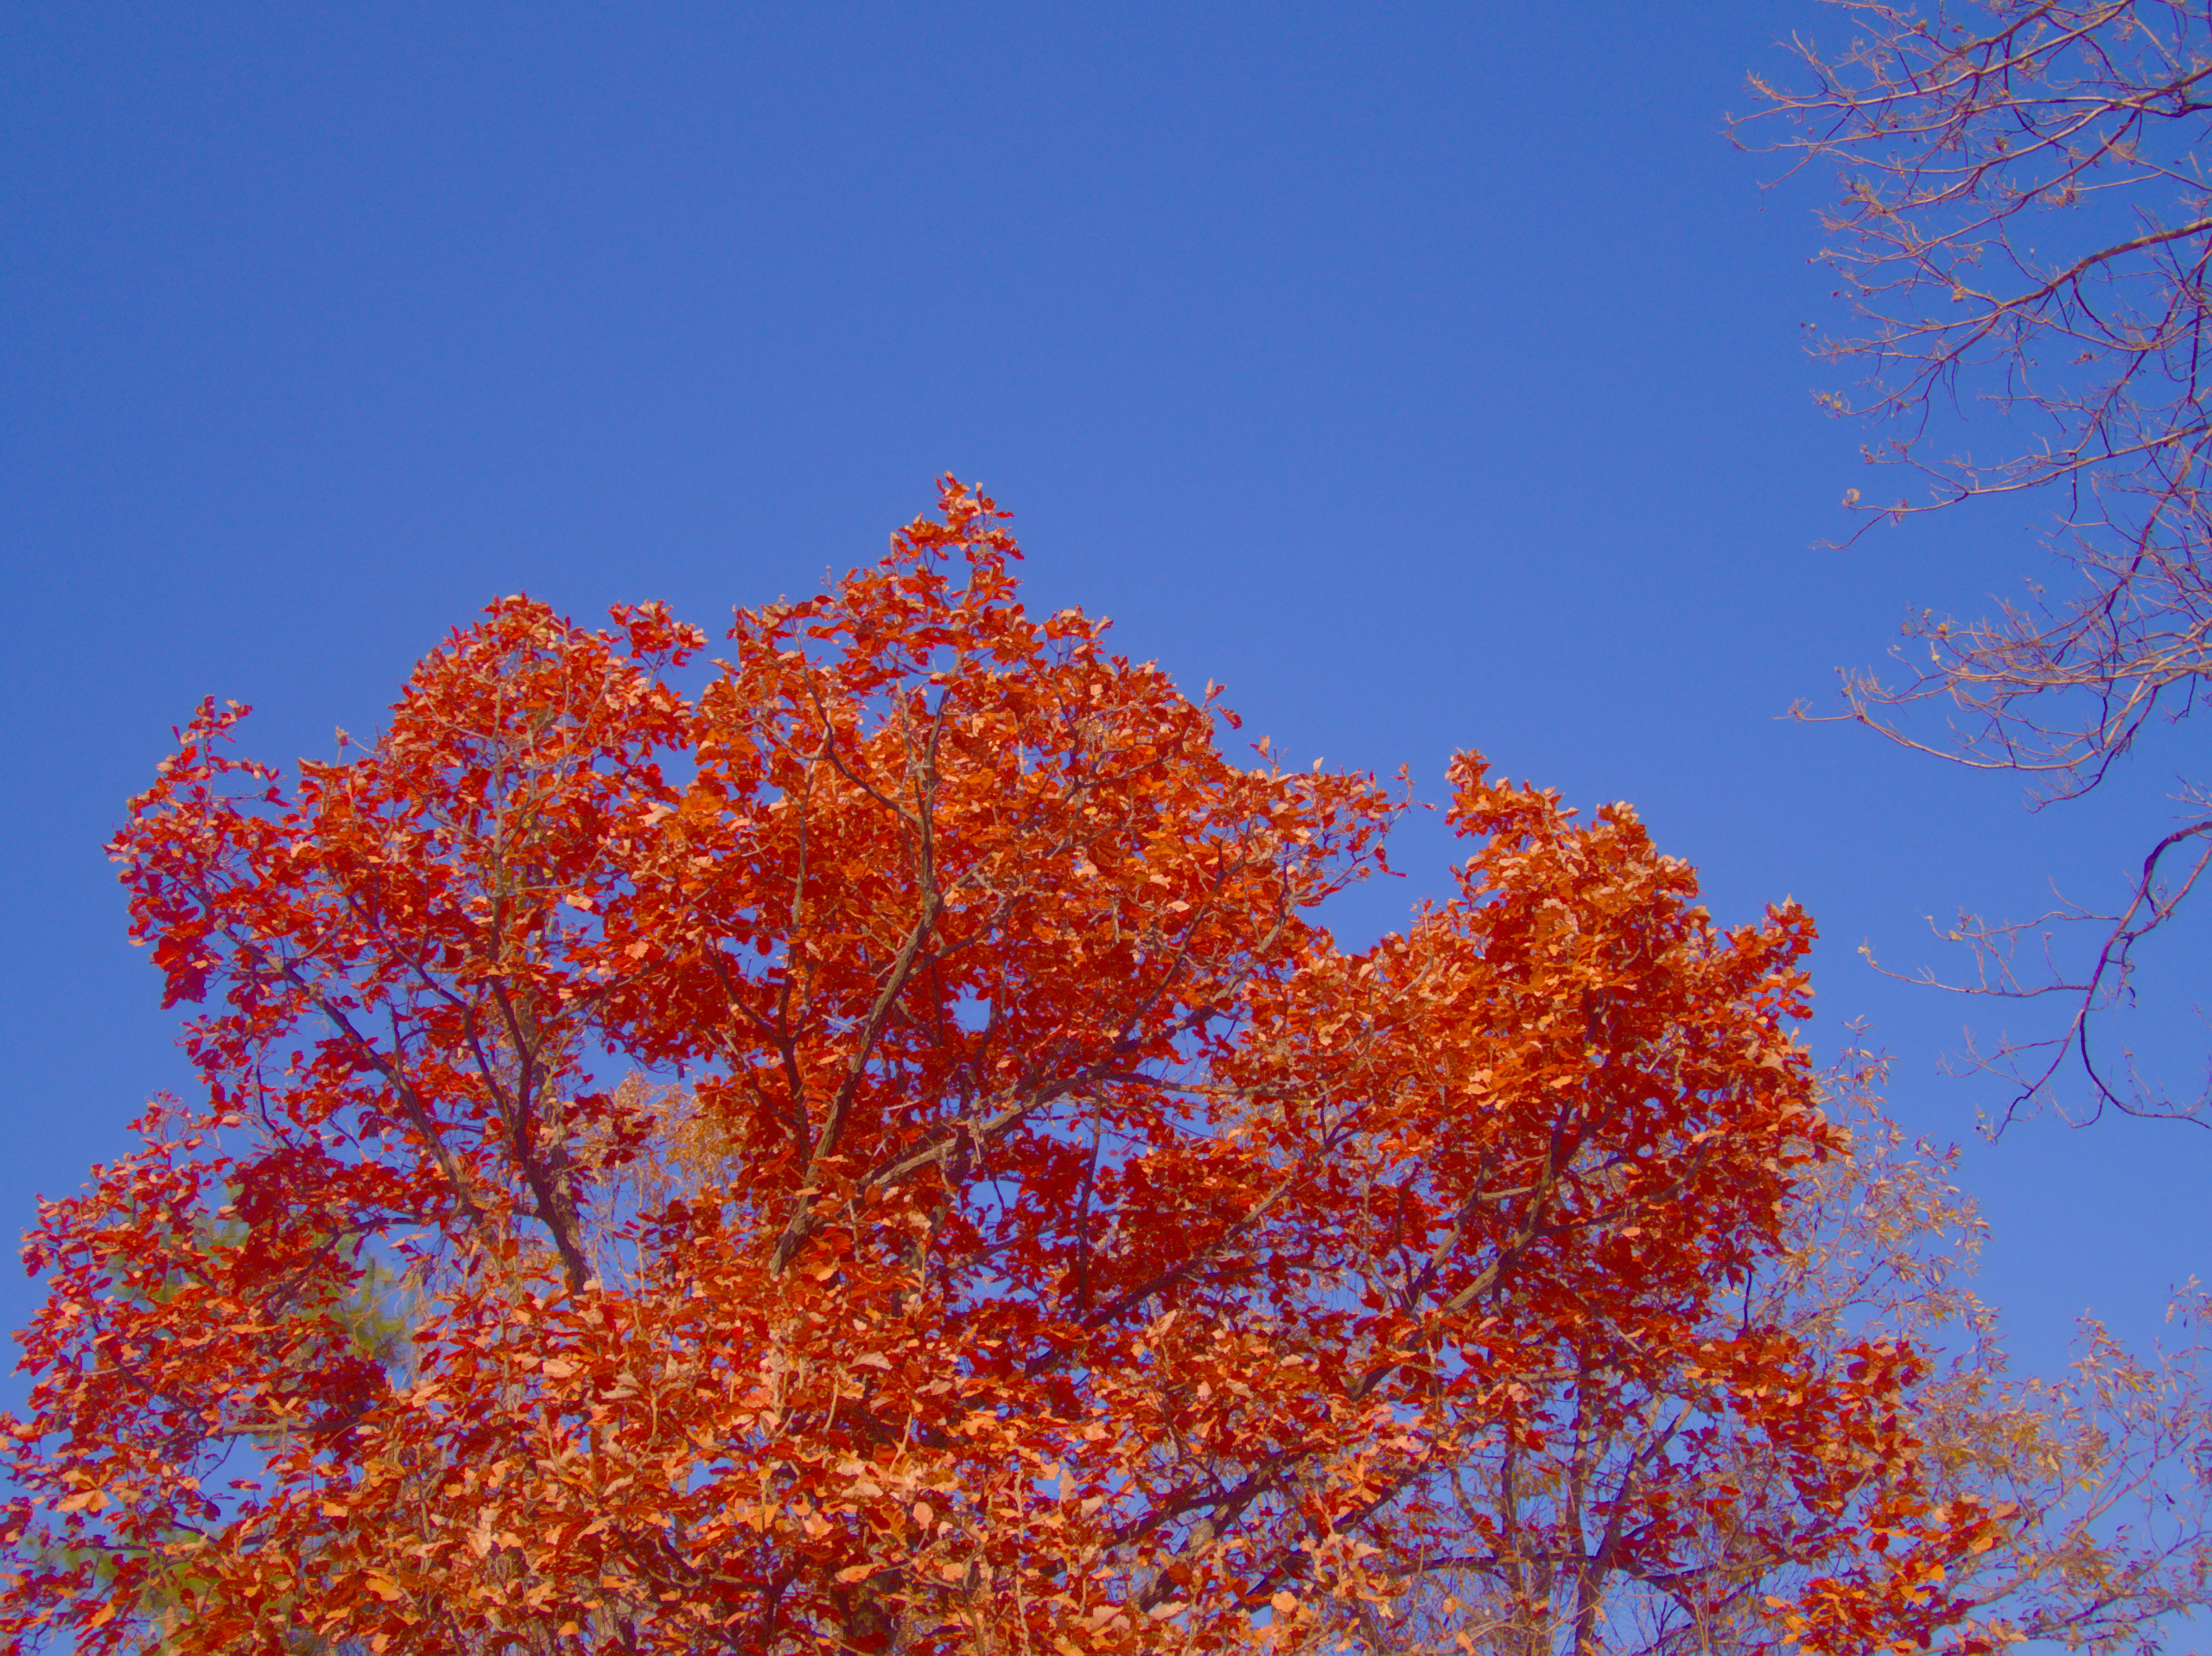 blue sky behind a tree with orange leaves